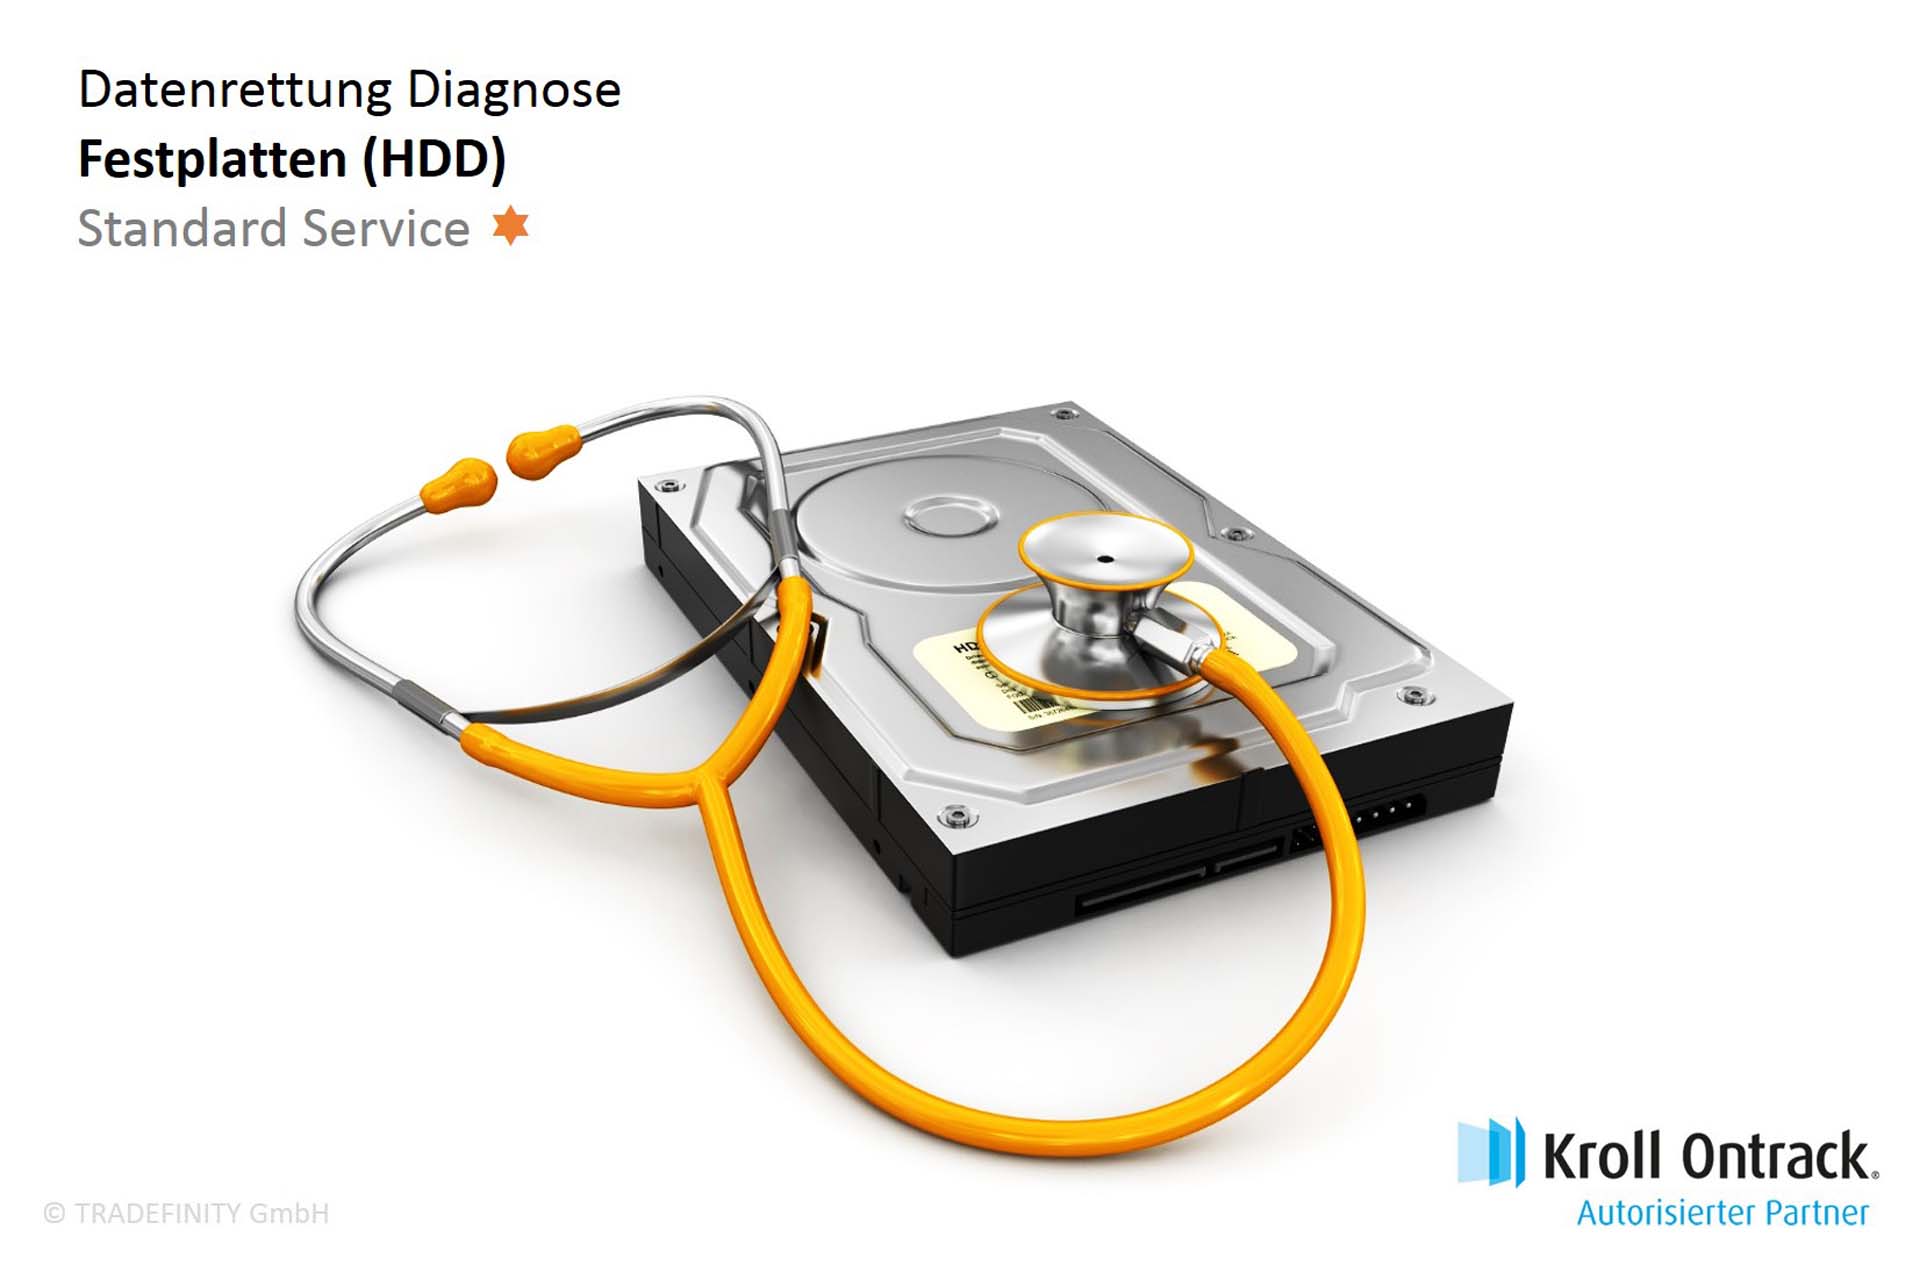 Datenrettung Diagnose (Standard Service) von HDD